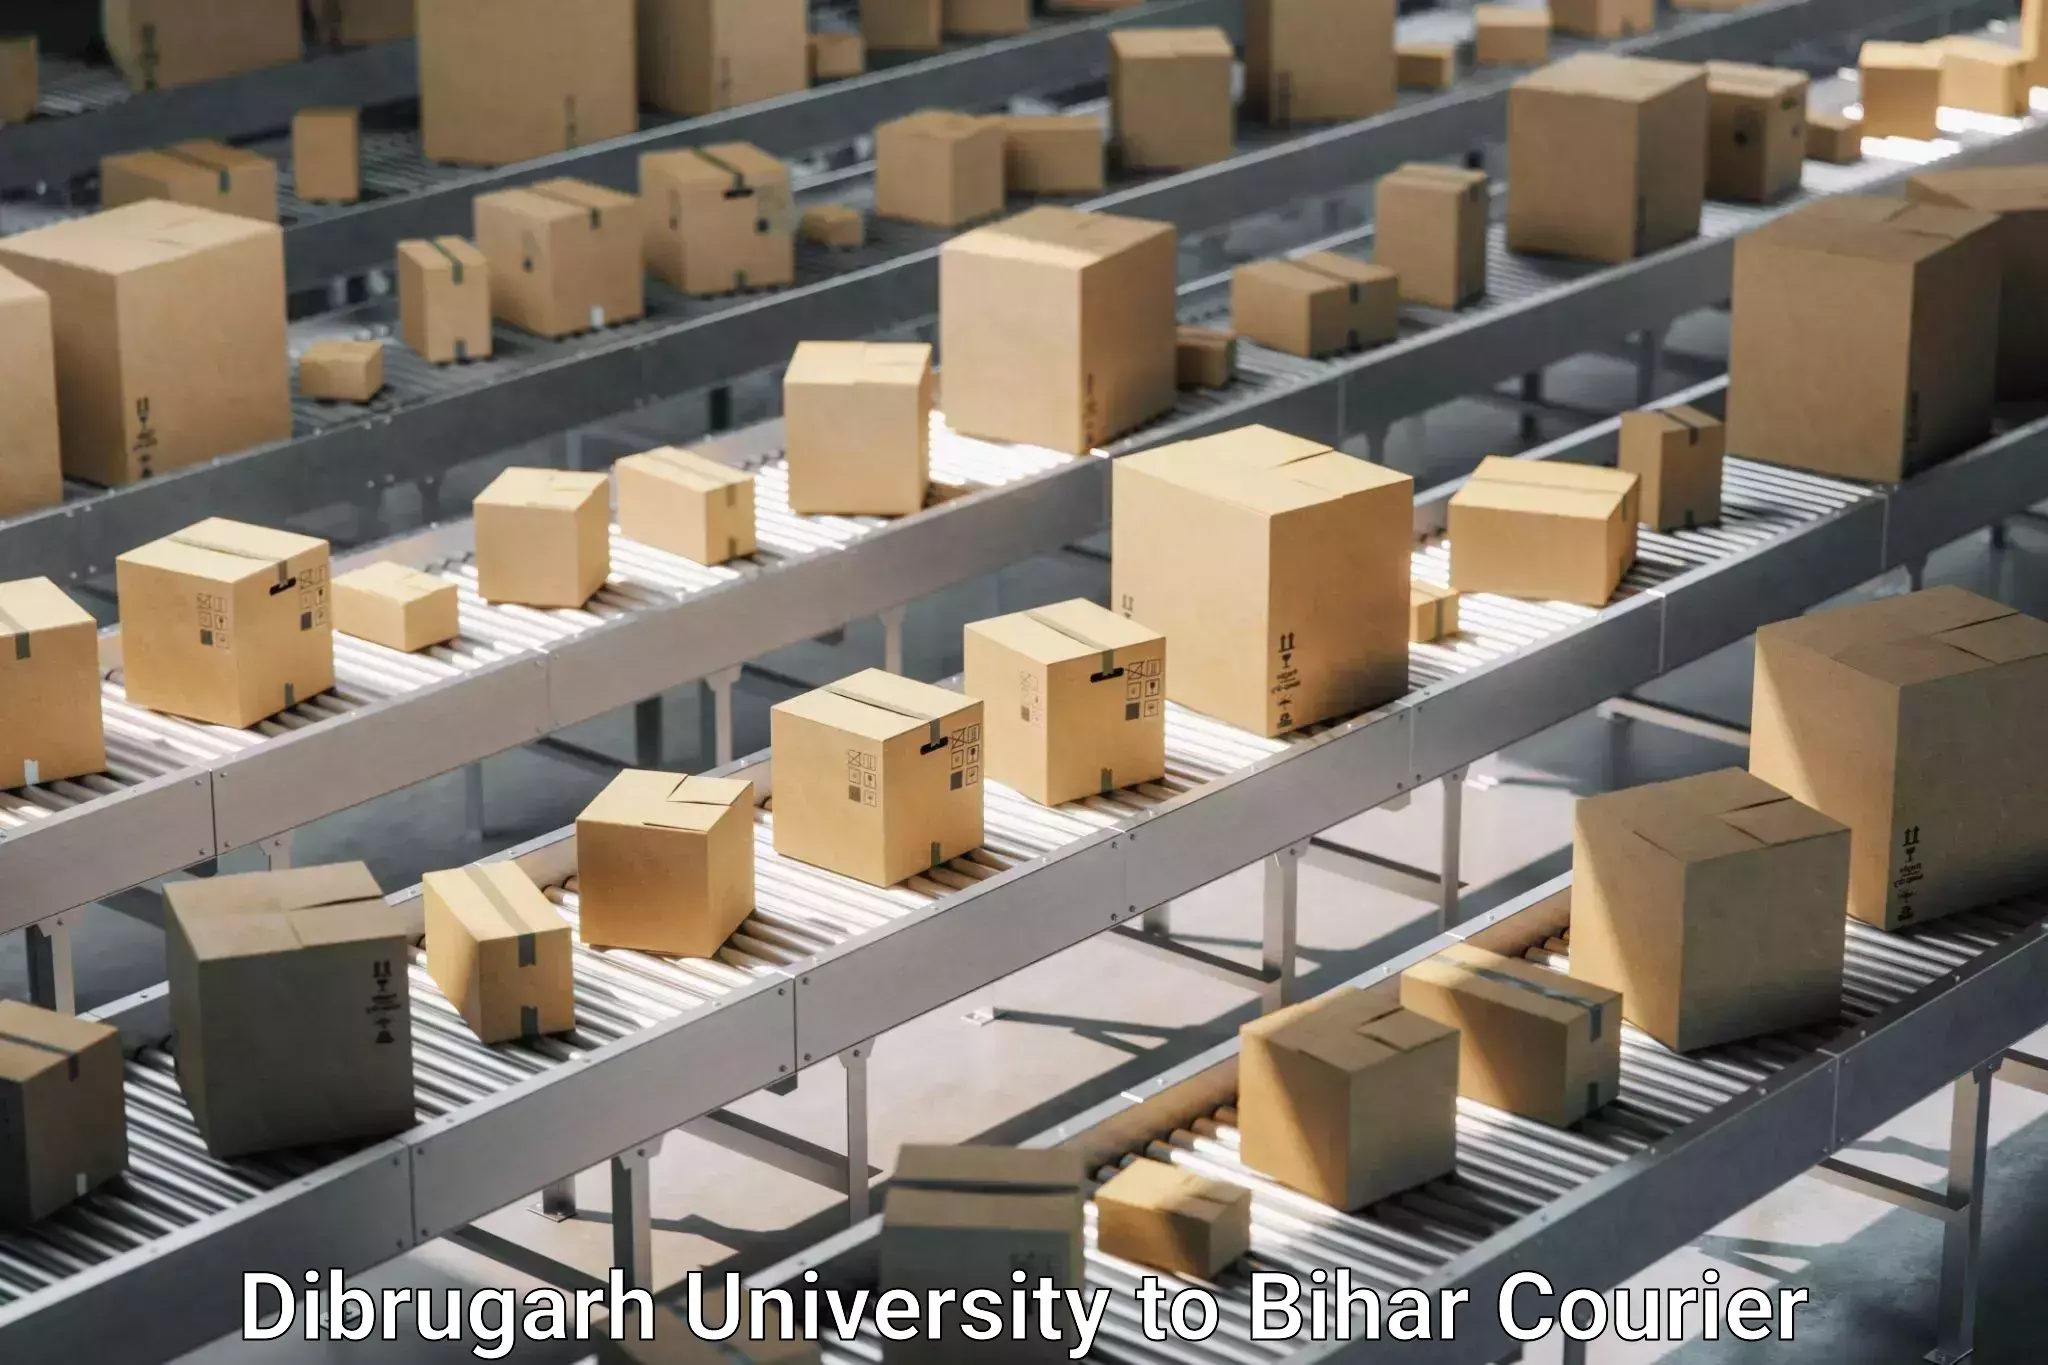 Professional moving company Dibrugarh University to Dumraon